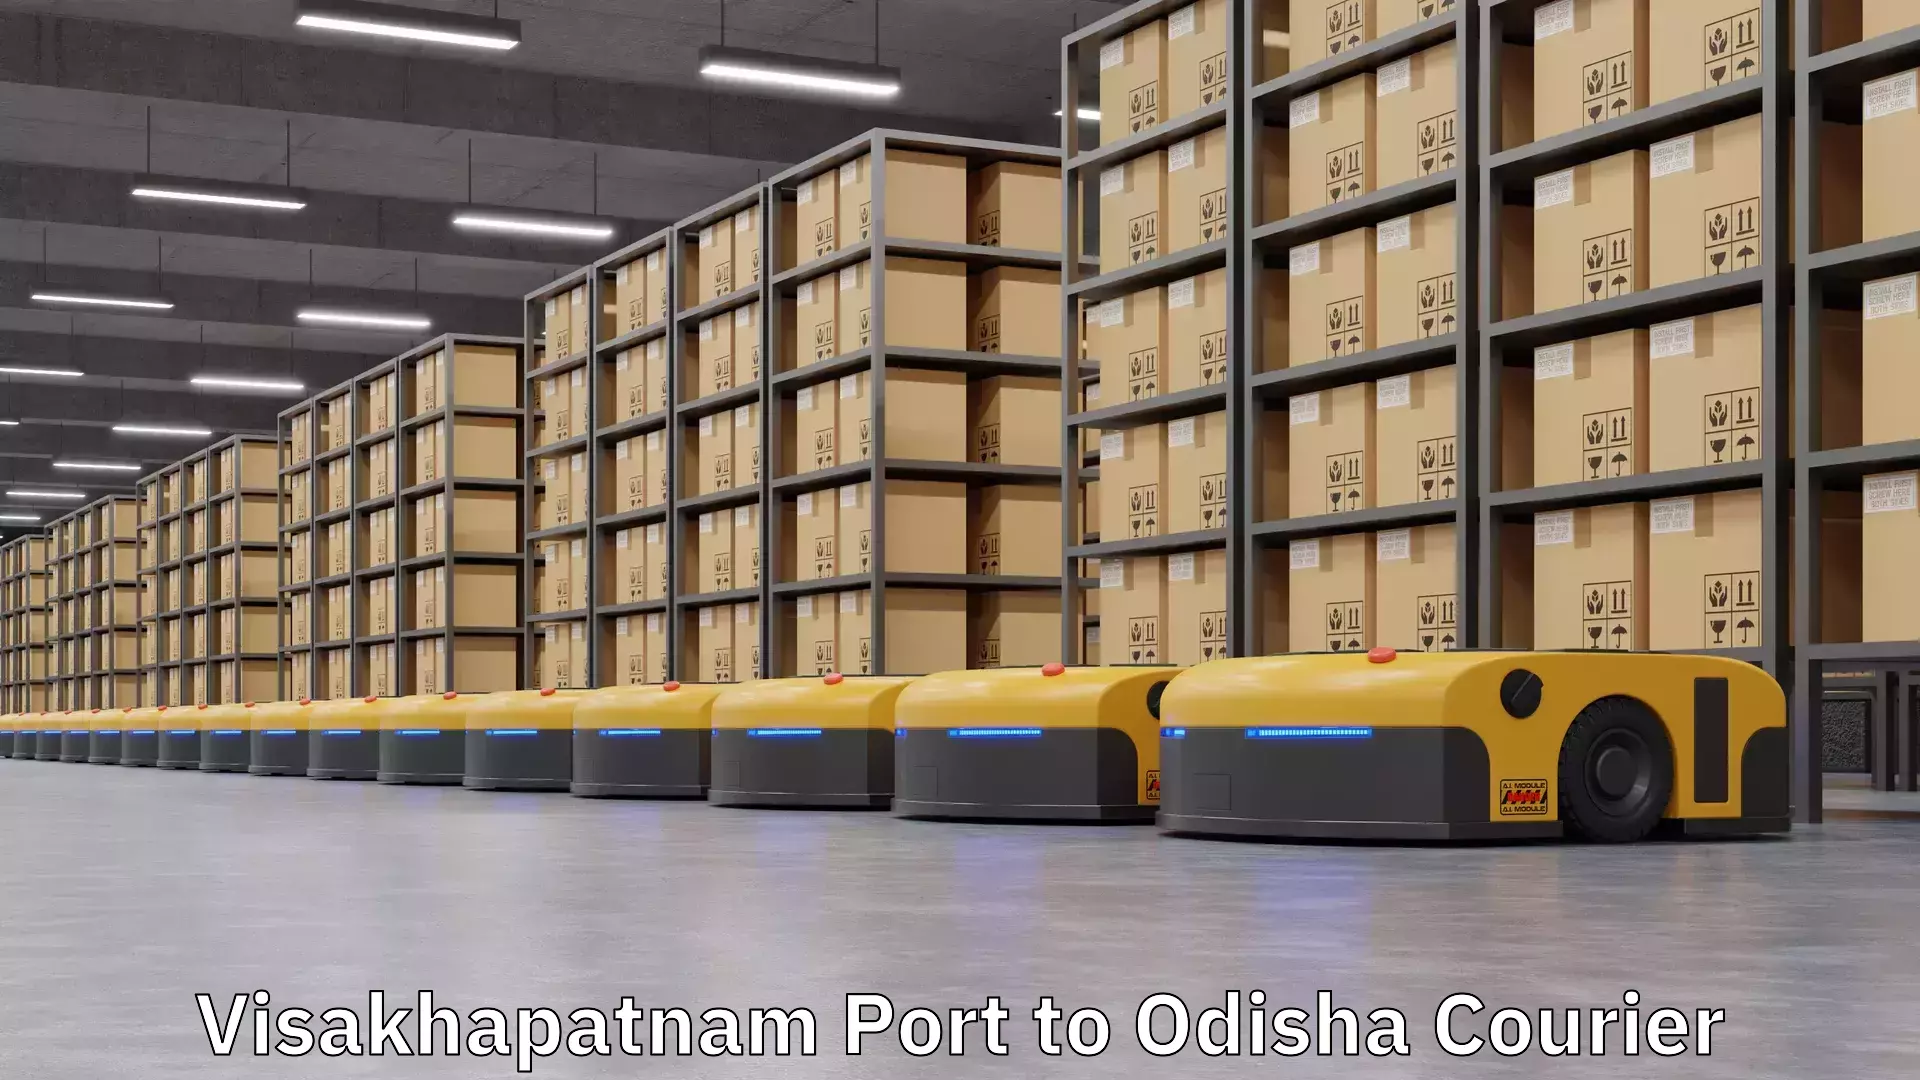 24/7 courier service Visakhapatnam Port to Odisha